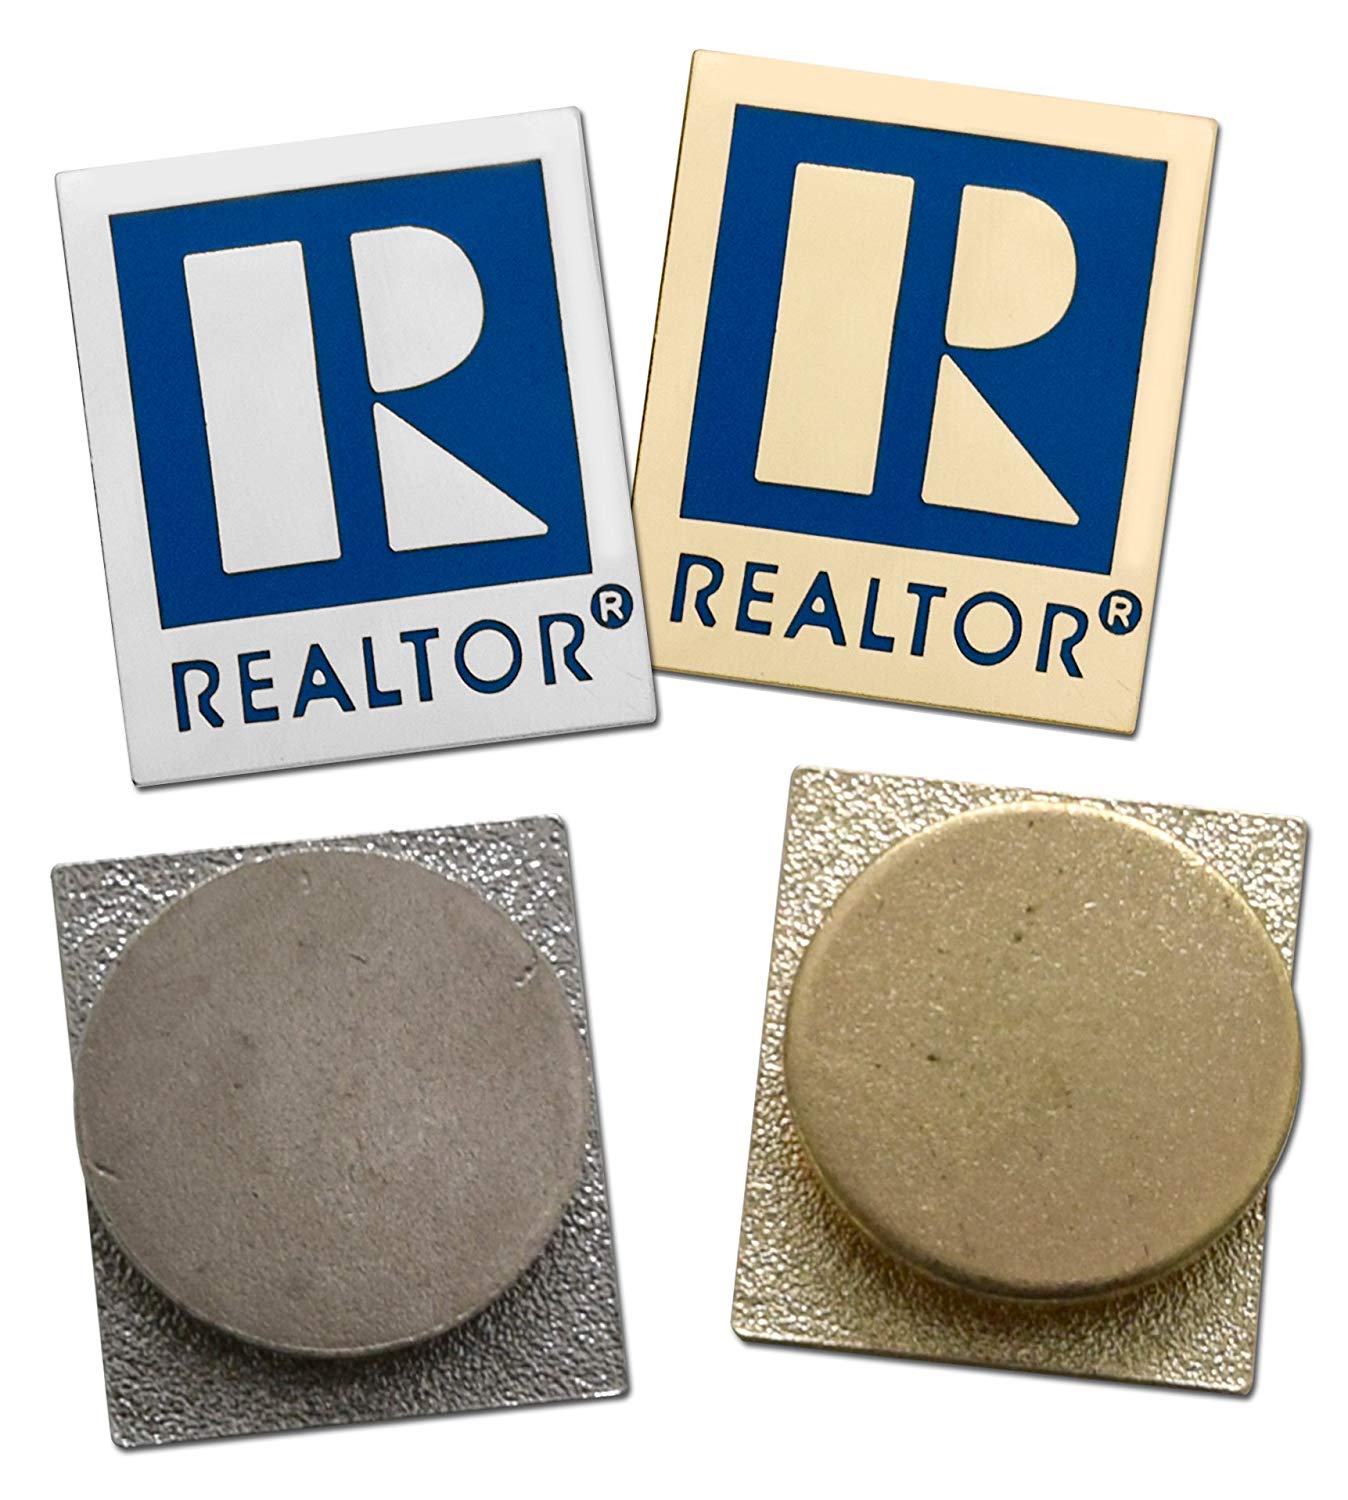 Circle R Realtor Logo - Amazon.com : Small REALTOR Logo Branded Lapel Pin with Magnetic Back